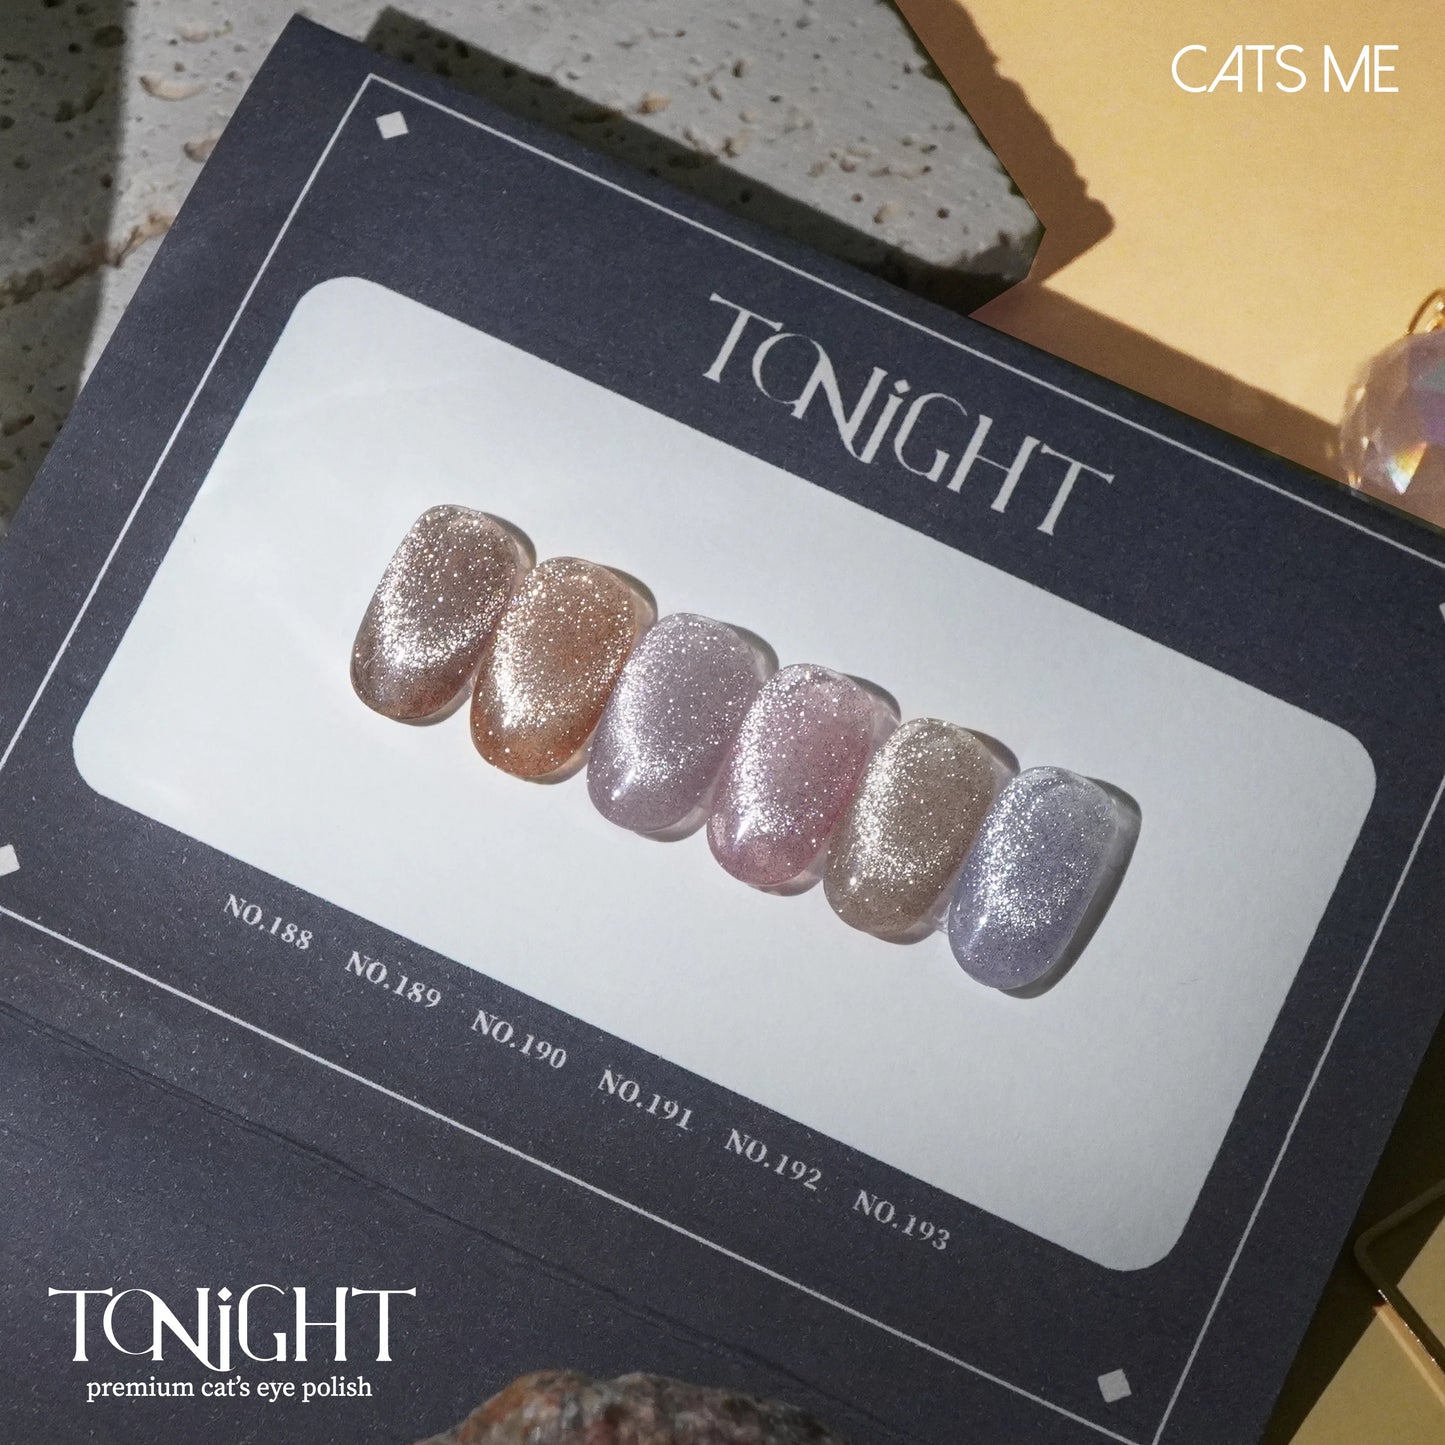 CATS ME- Tonight